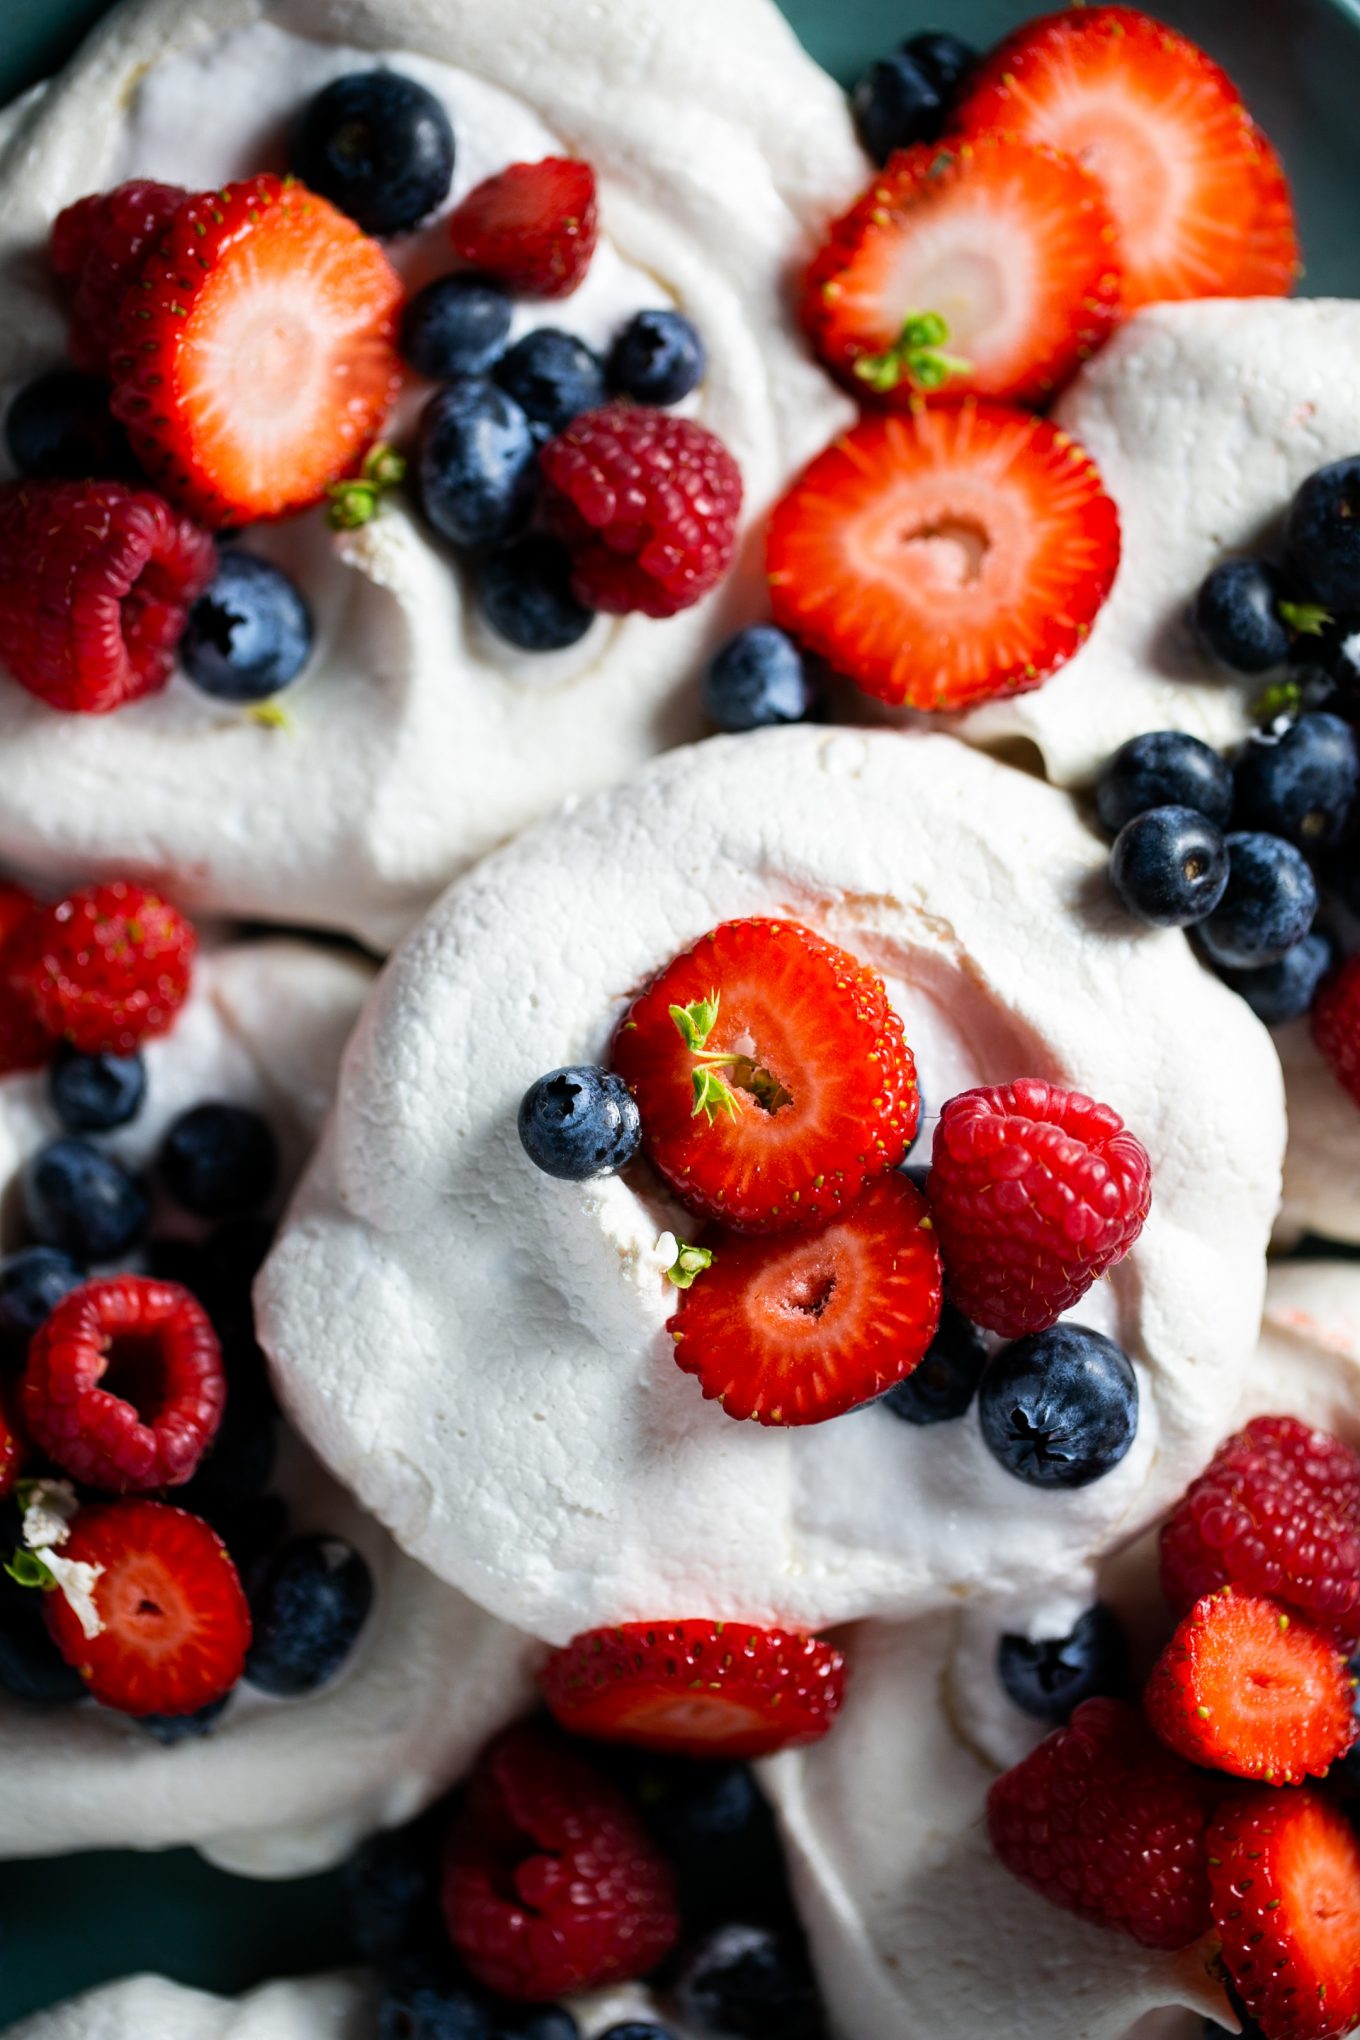 Vegan pavlova topped with sliced strawberries, blueberries and raspberries.